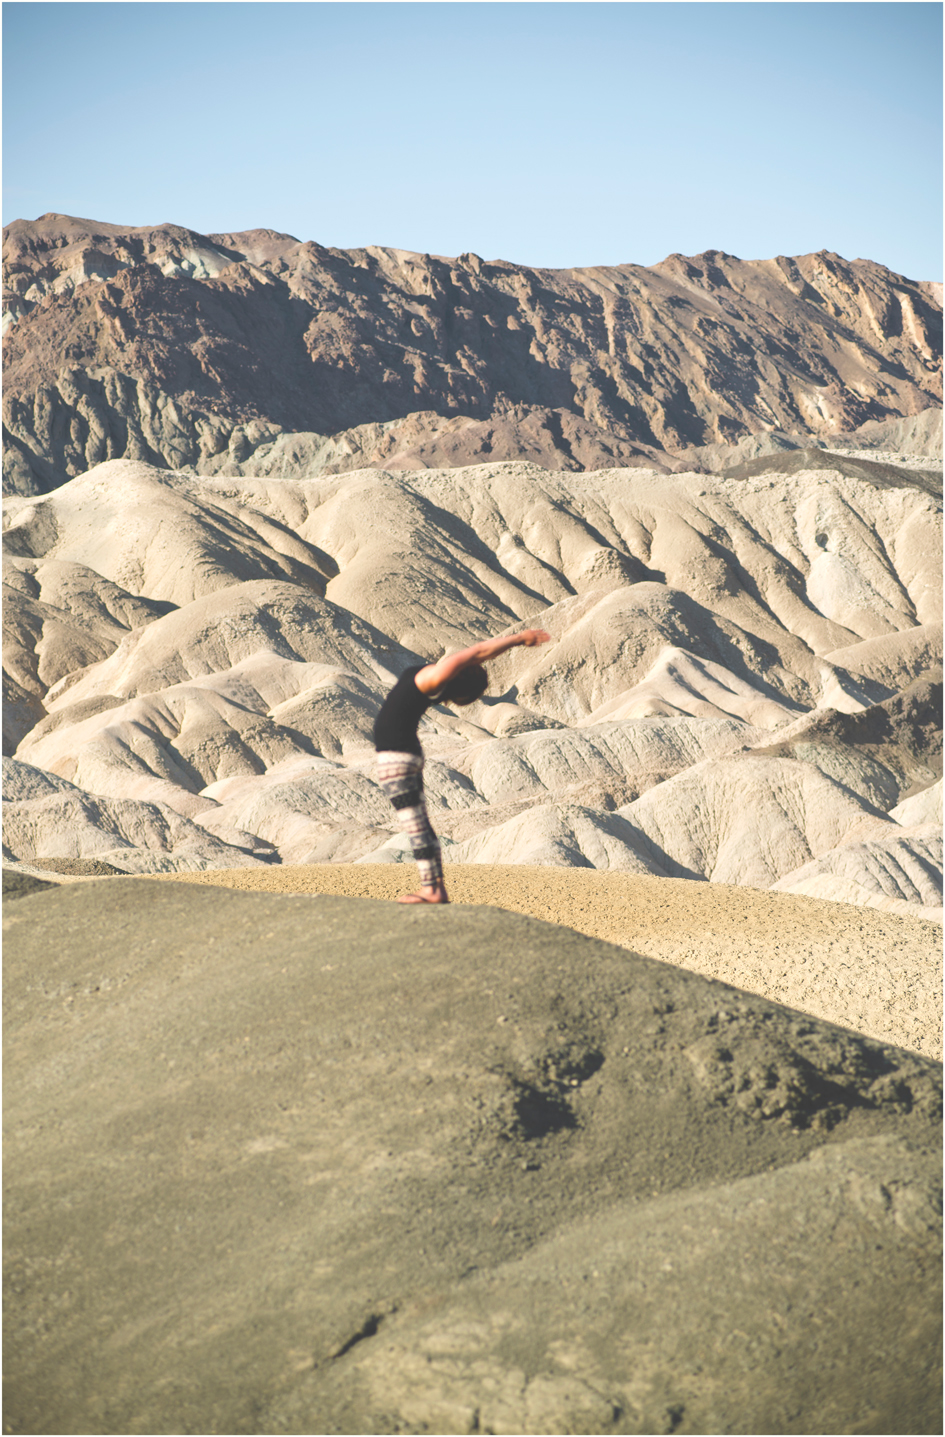 Adobe Portfolio orelib oreli.b oreli berthollier Yoga sports girls nikita Photographie Landscape